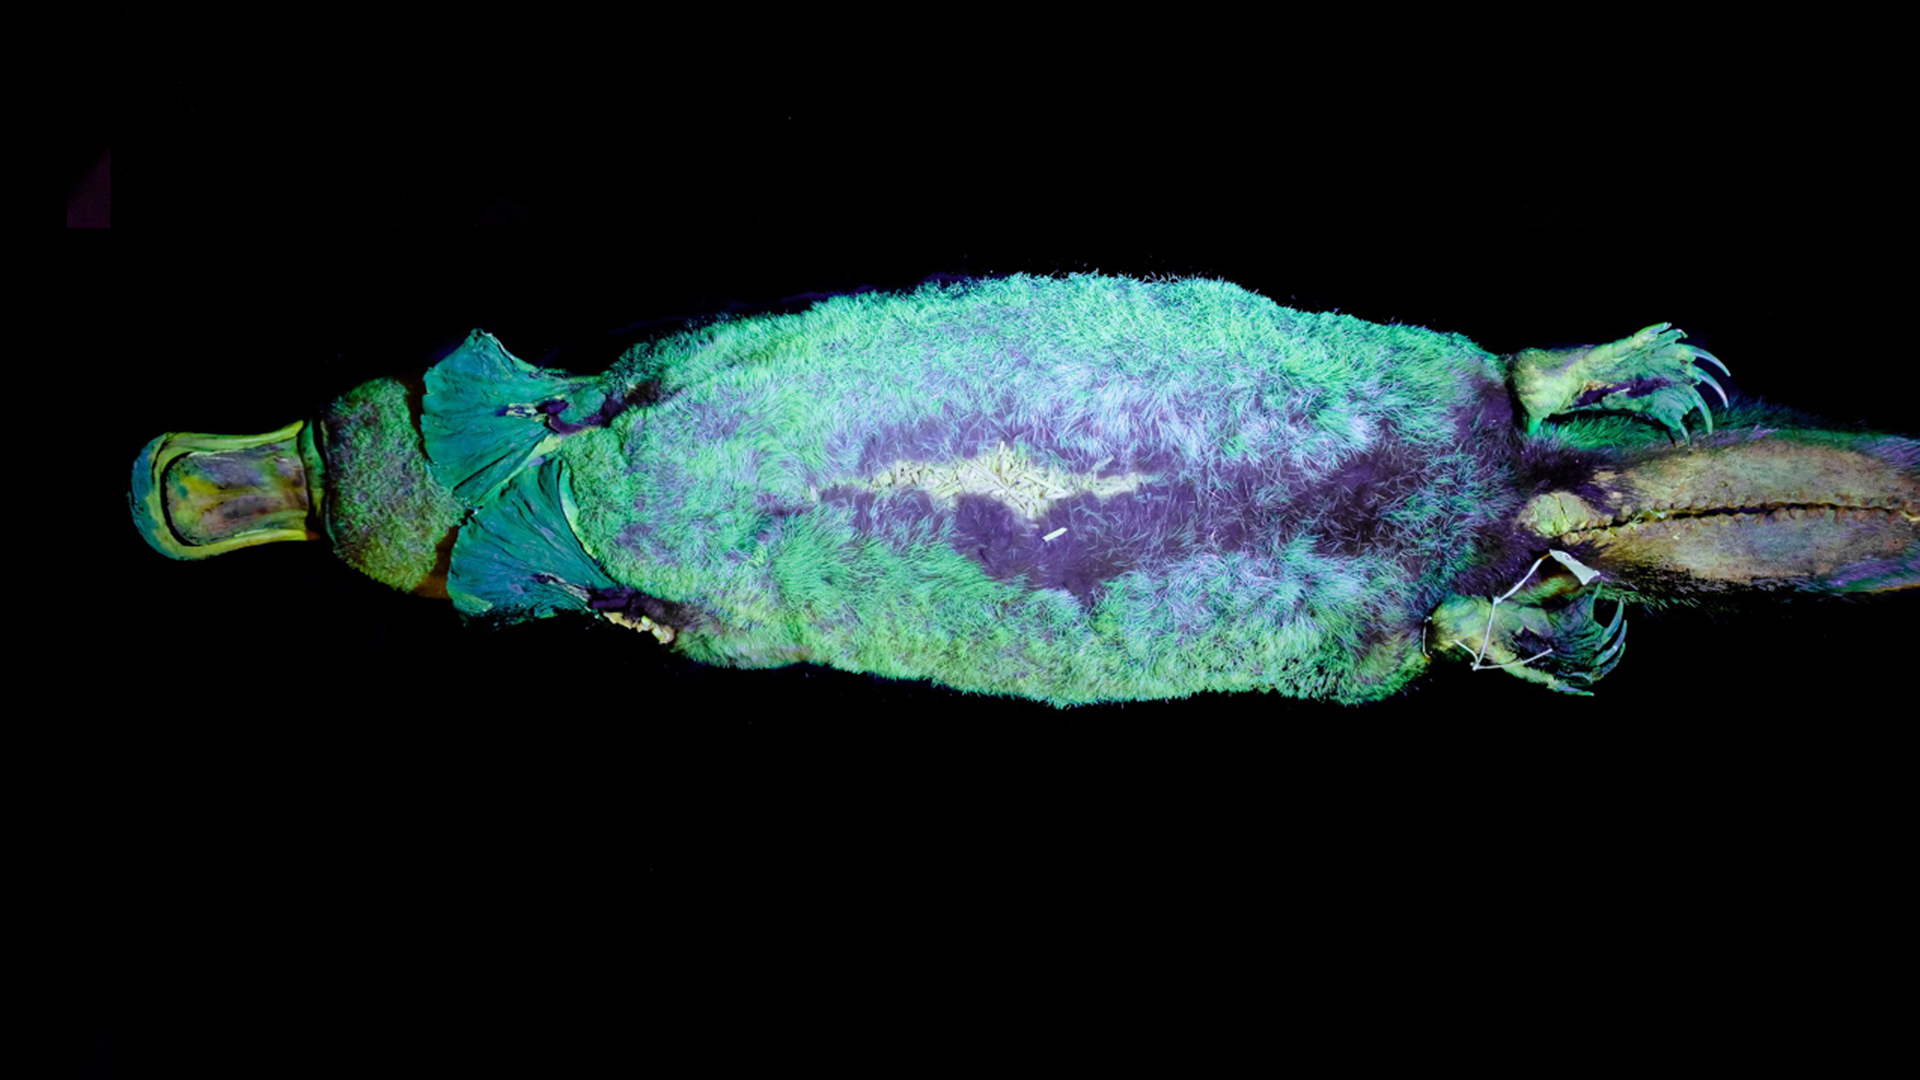 Photographs of museum specimens in ultraviolet light revealed the platypus's secret glow.